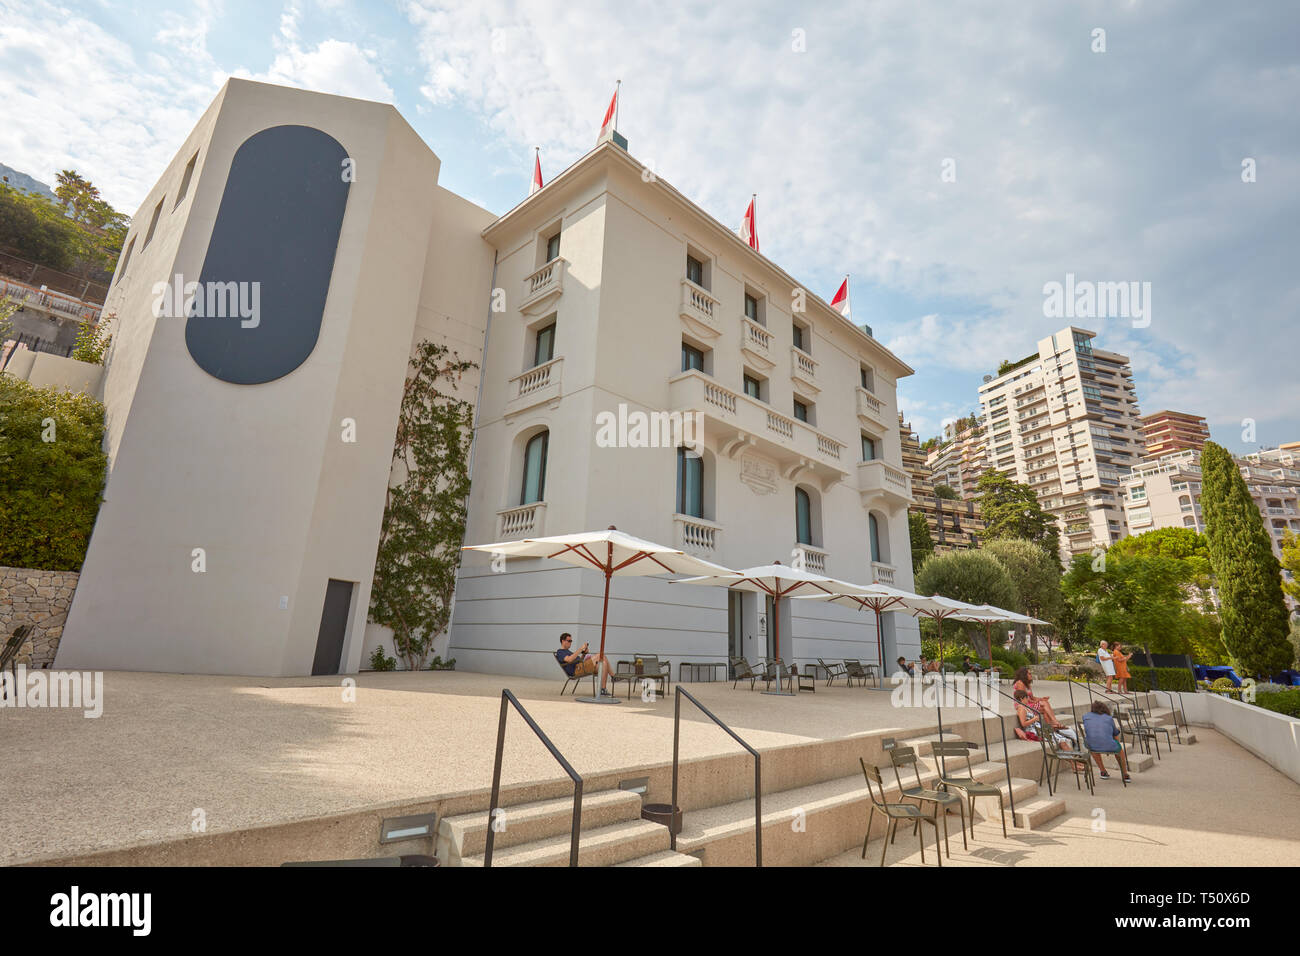 MONTE CARLO, MONACO - AUGUST 20, 2016: Villa Paloma contemporary art museum building with people in a sunny summer day in Monte Carlo, Monaco. Stock Photo